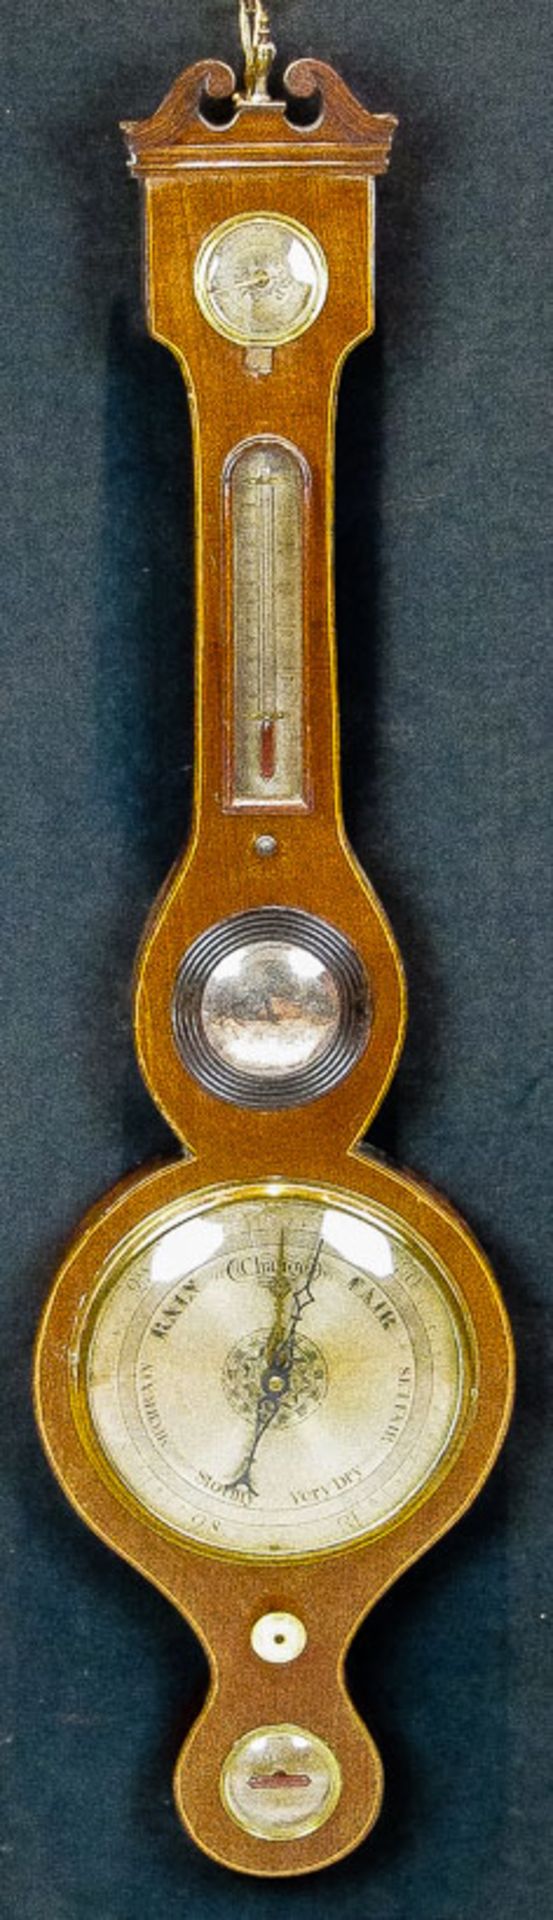 Viktorianisches Radbarometer England, 2. H. 19. Jh.